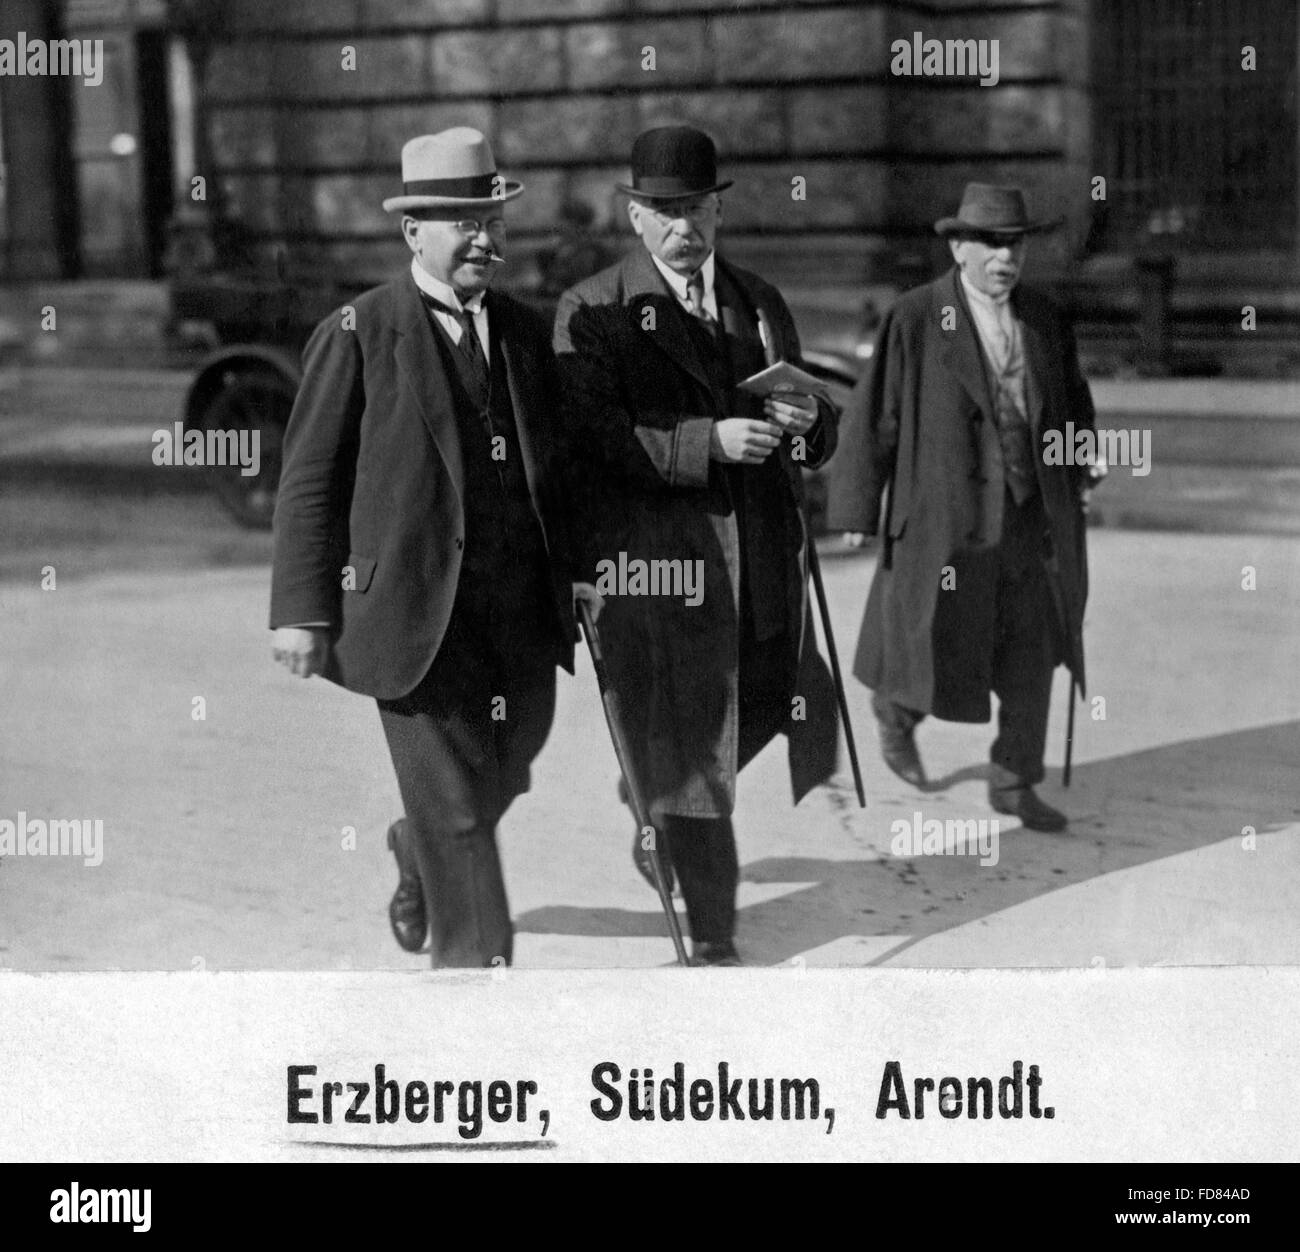 Matthias Erzberger, Albert Südekum and Arendt, 1918 Stock Photo